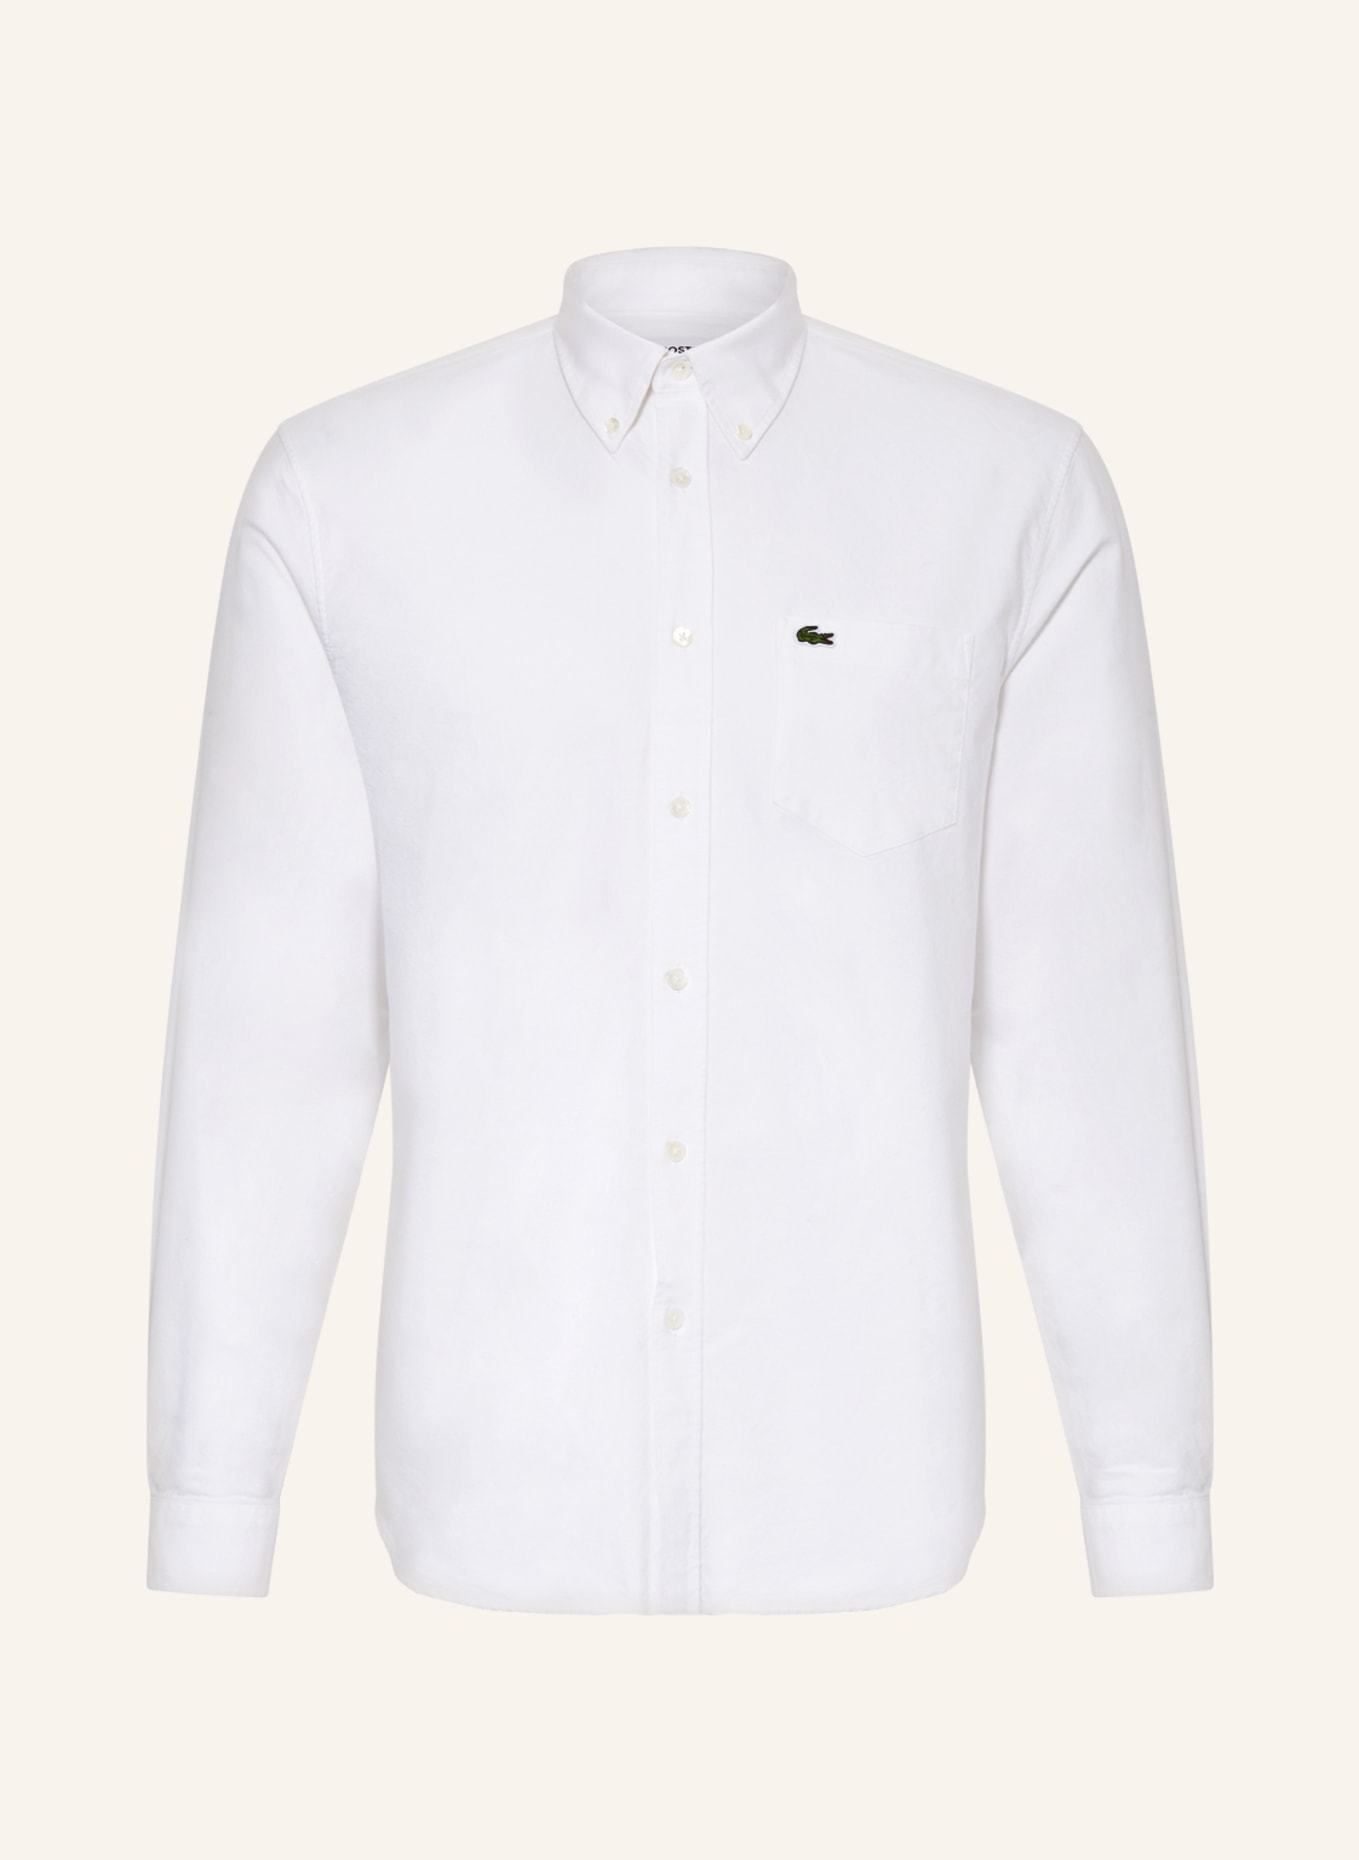 LACOSTE Oxfordhemd Regular Fit, Farbe: CREME (Bild 1)